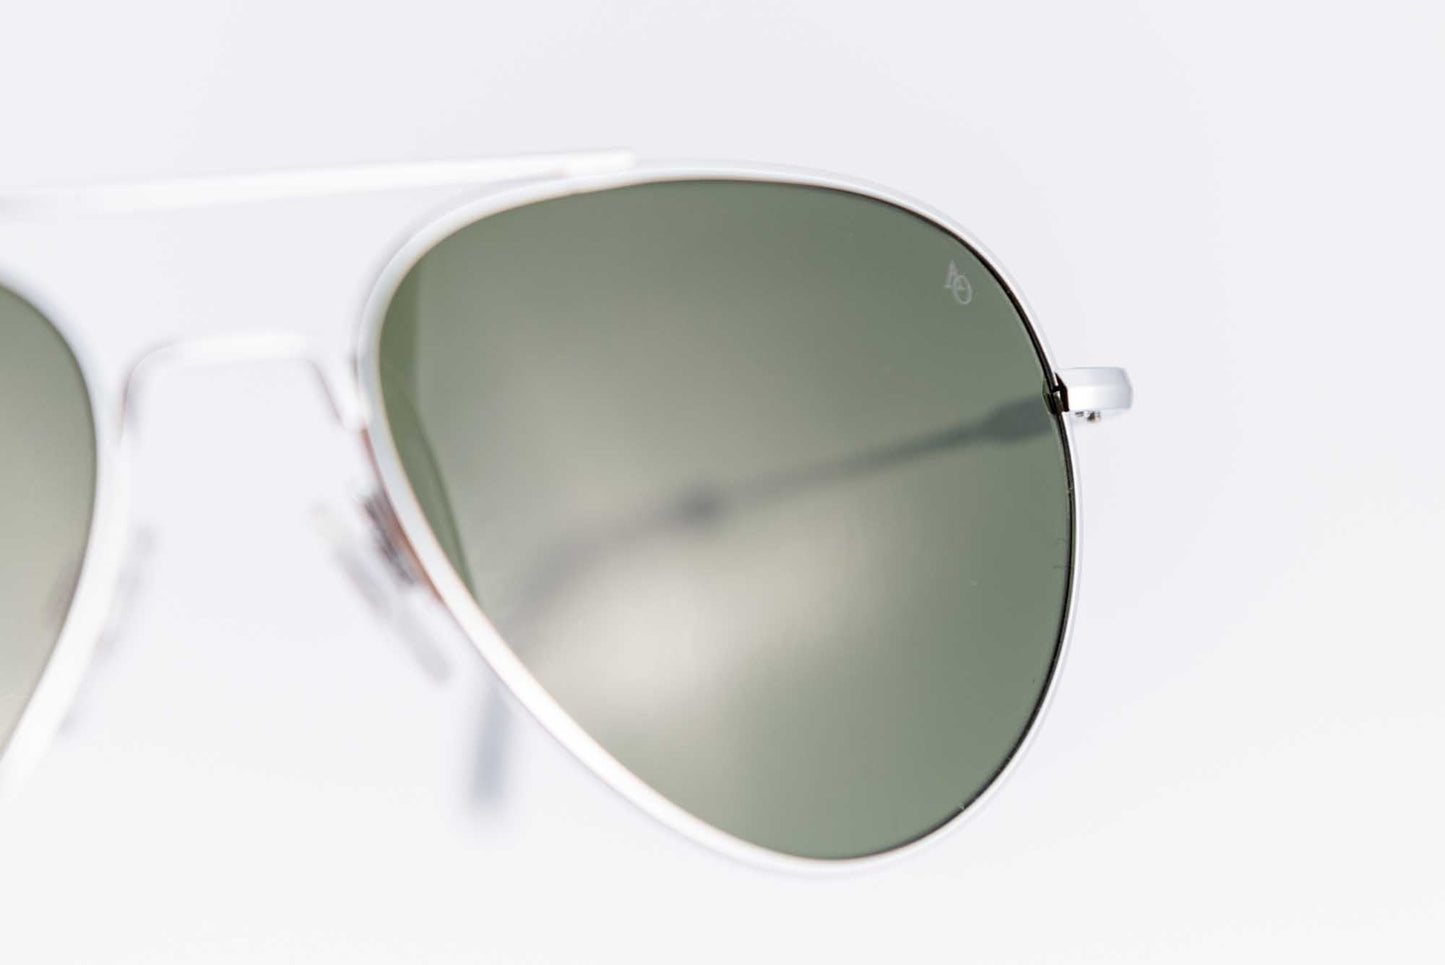 American Optical: general argento - Spectaclo.com - eyewear store - Occhiali da sole - 58 / Argento / Aviator